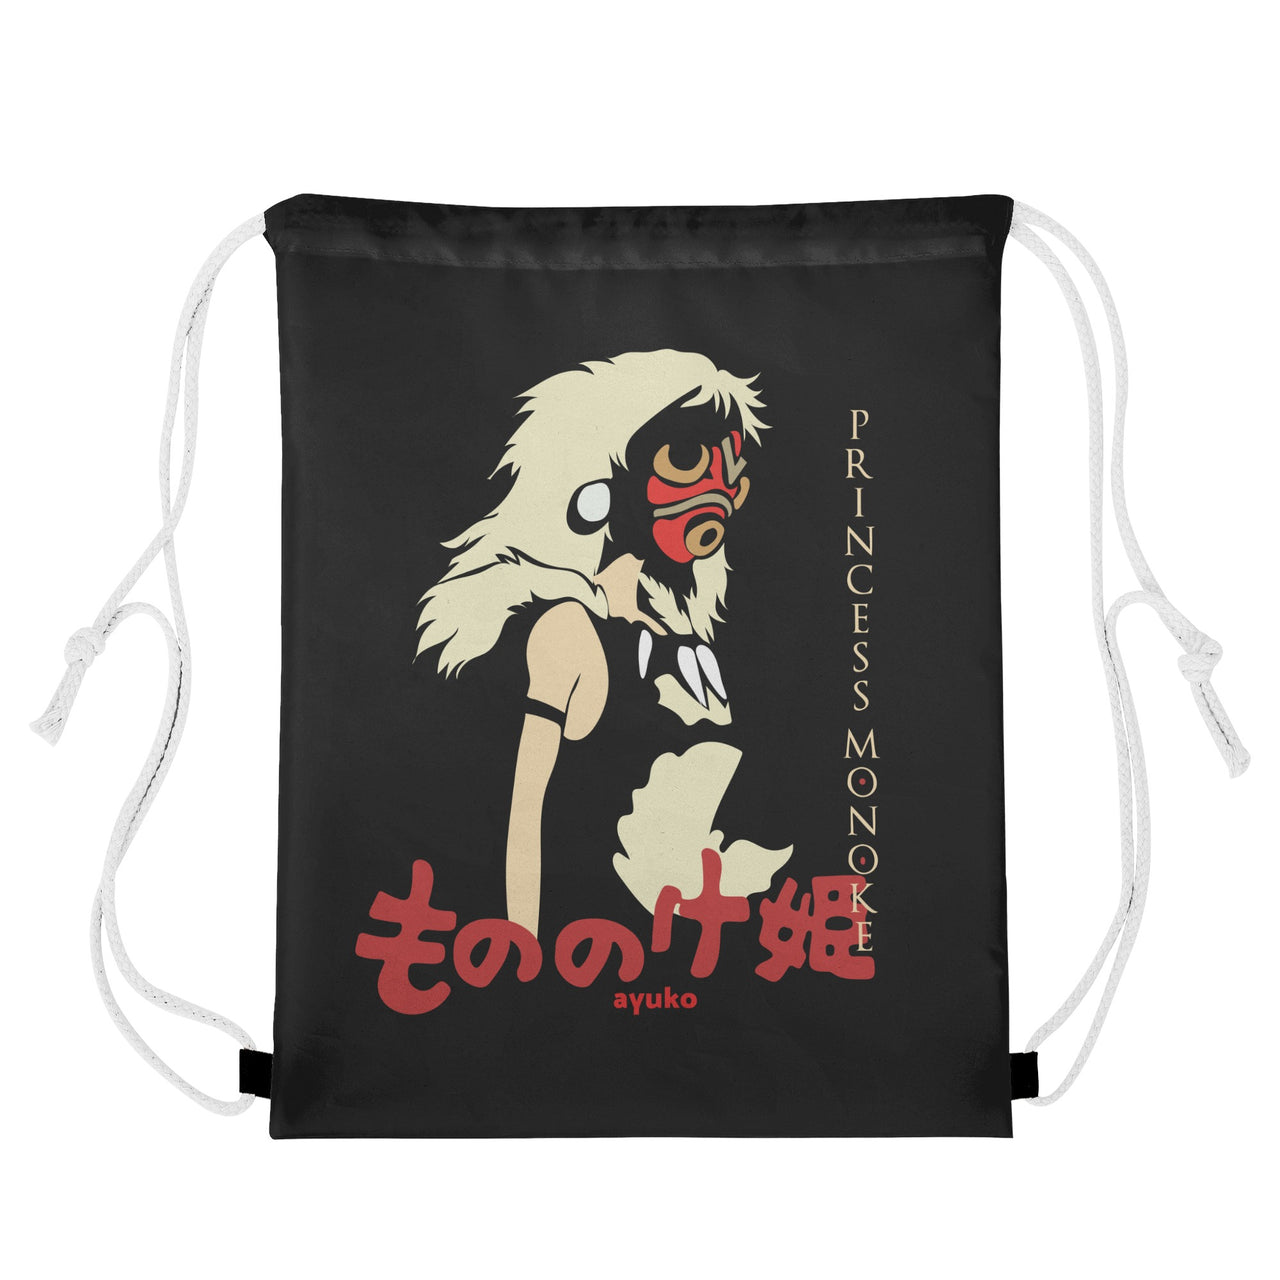 Princess Mononoke Anime Drawstring Bag